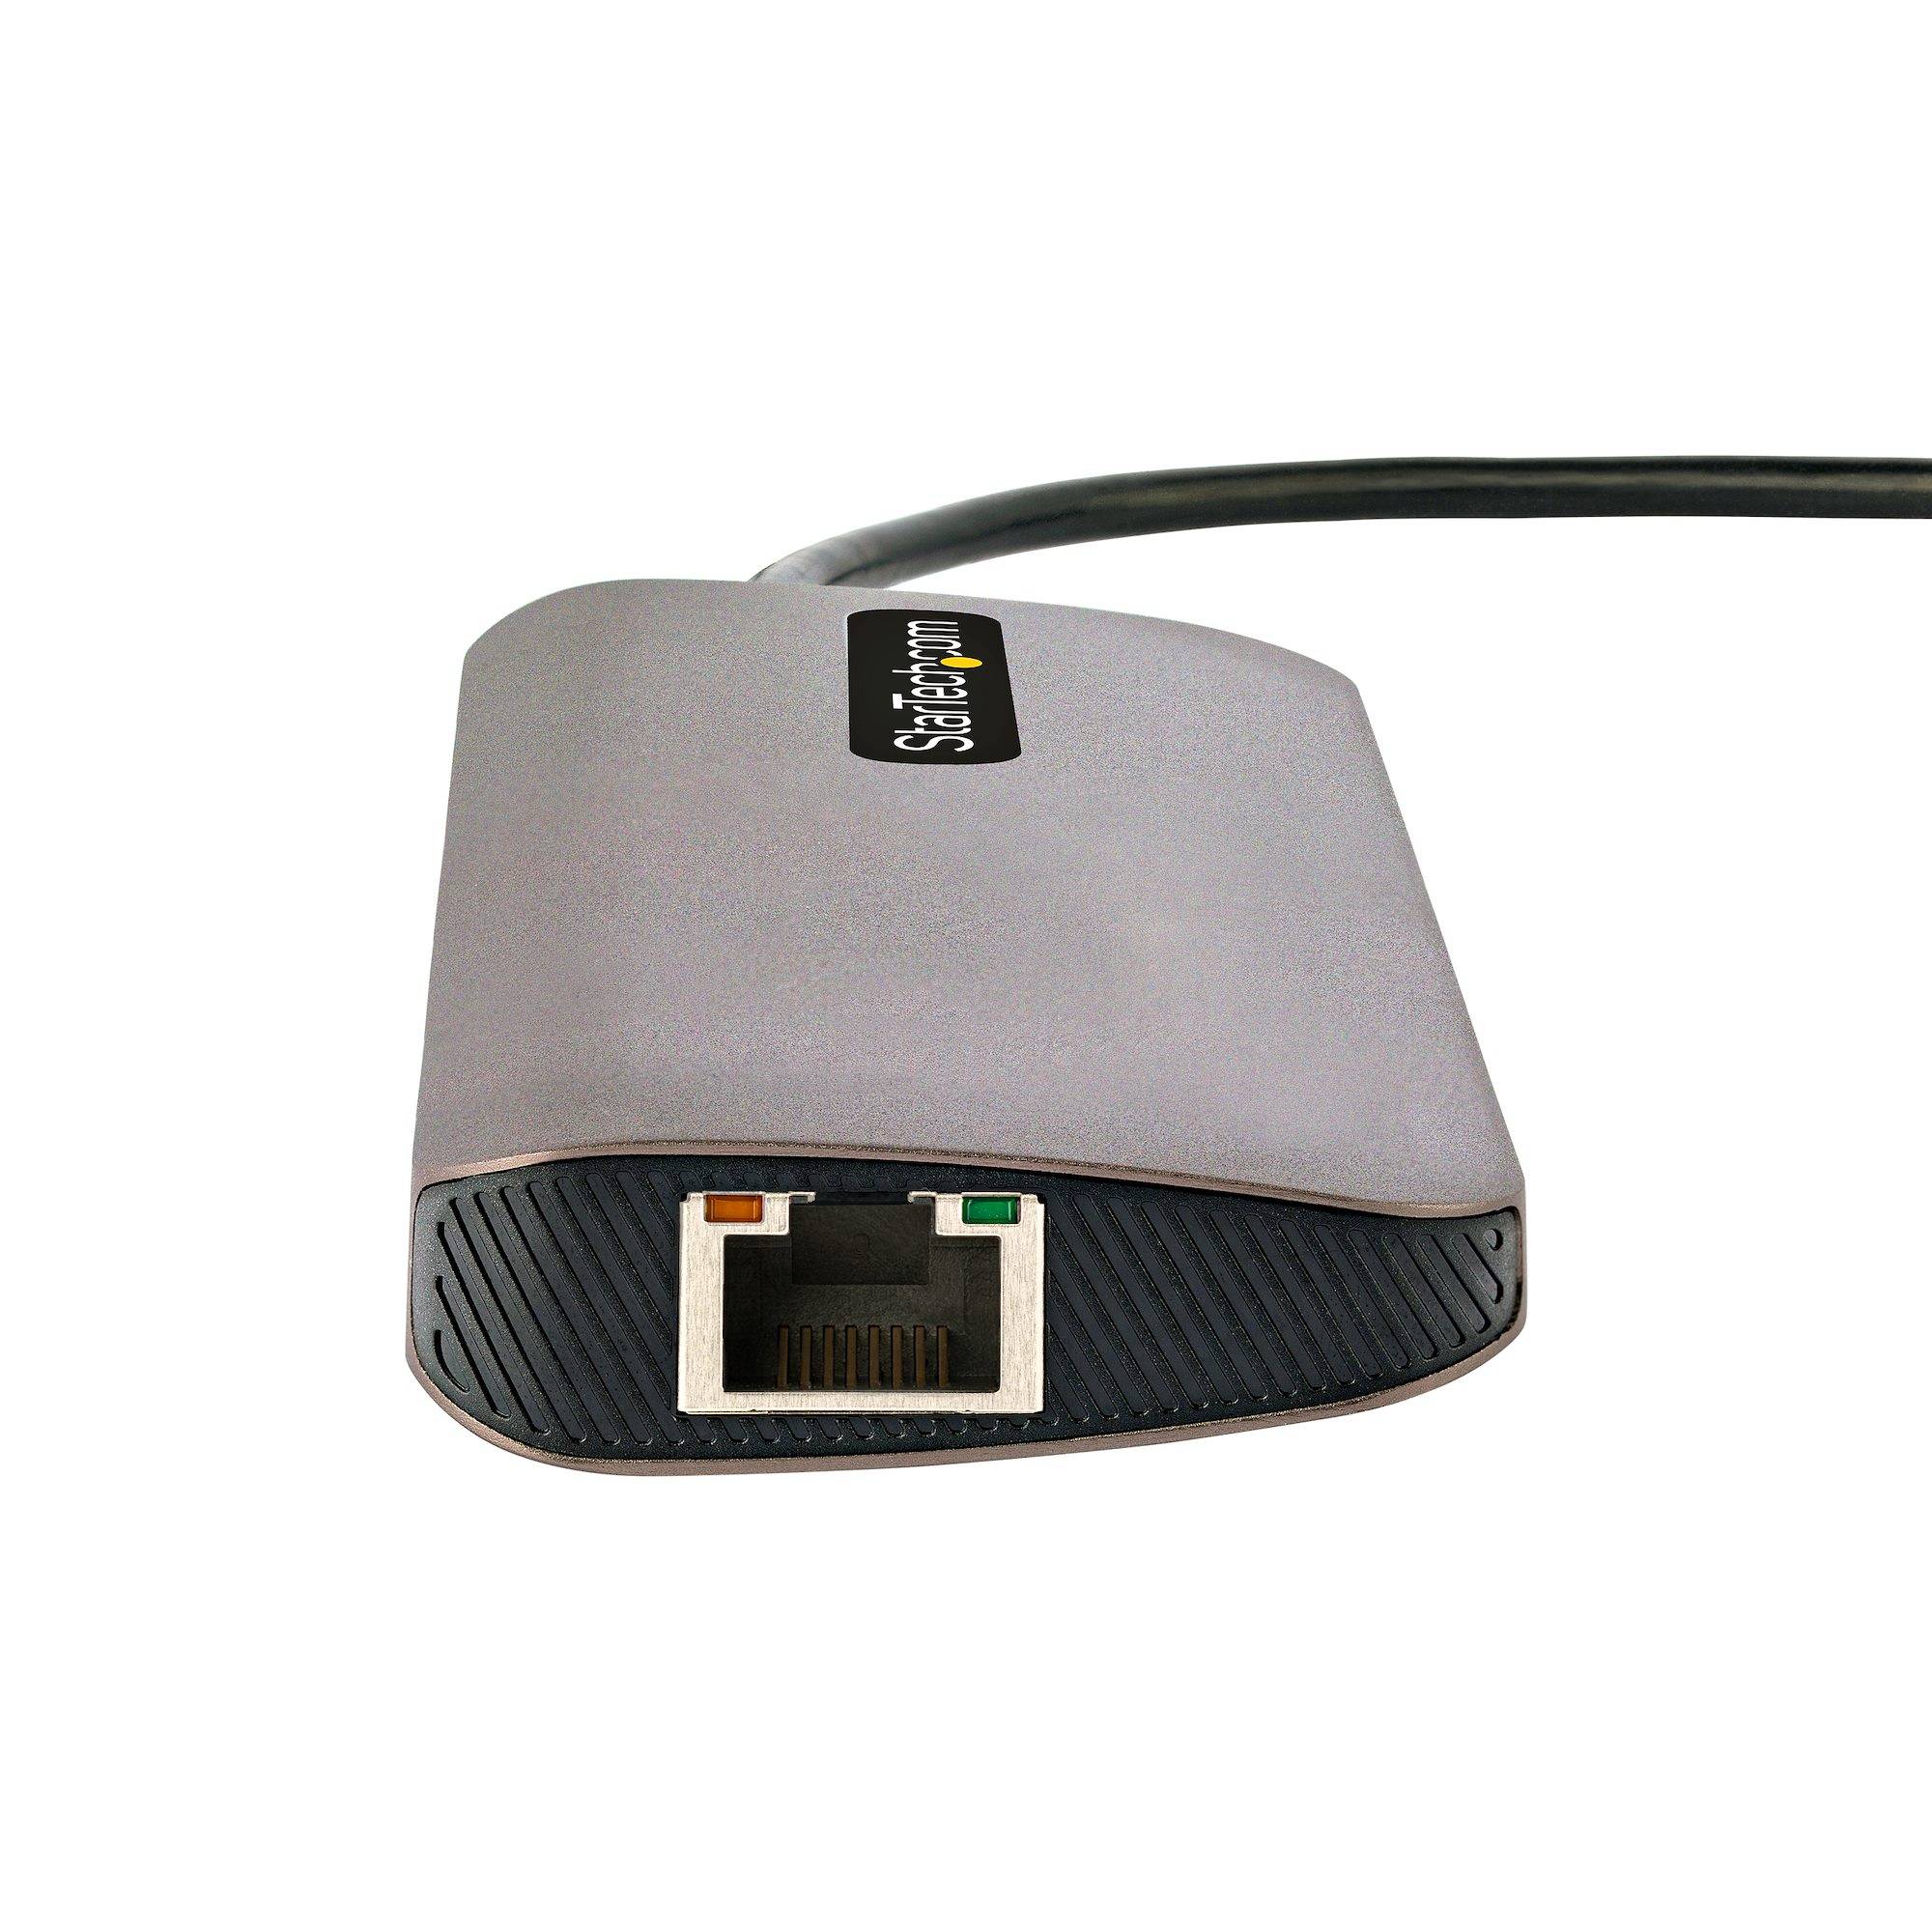 Rca Informatique - image du produit : USB C MULTIPORT ADAPTER 4K 60HZ HDMI VIDEO/5GBPS USB HUB/100W PD